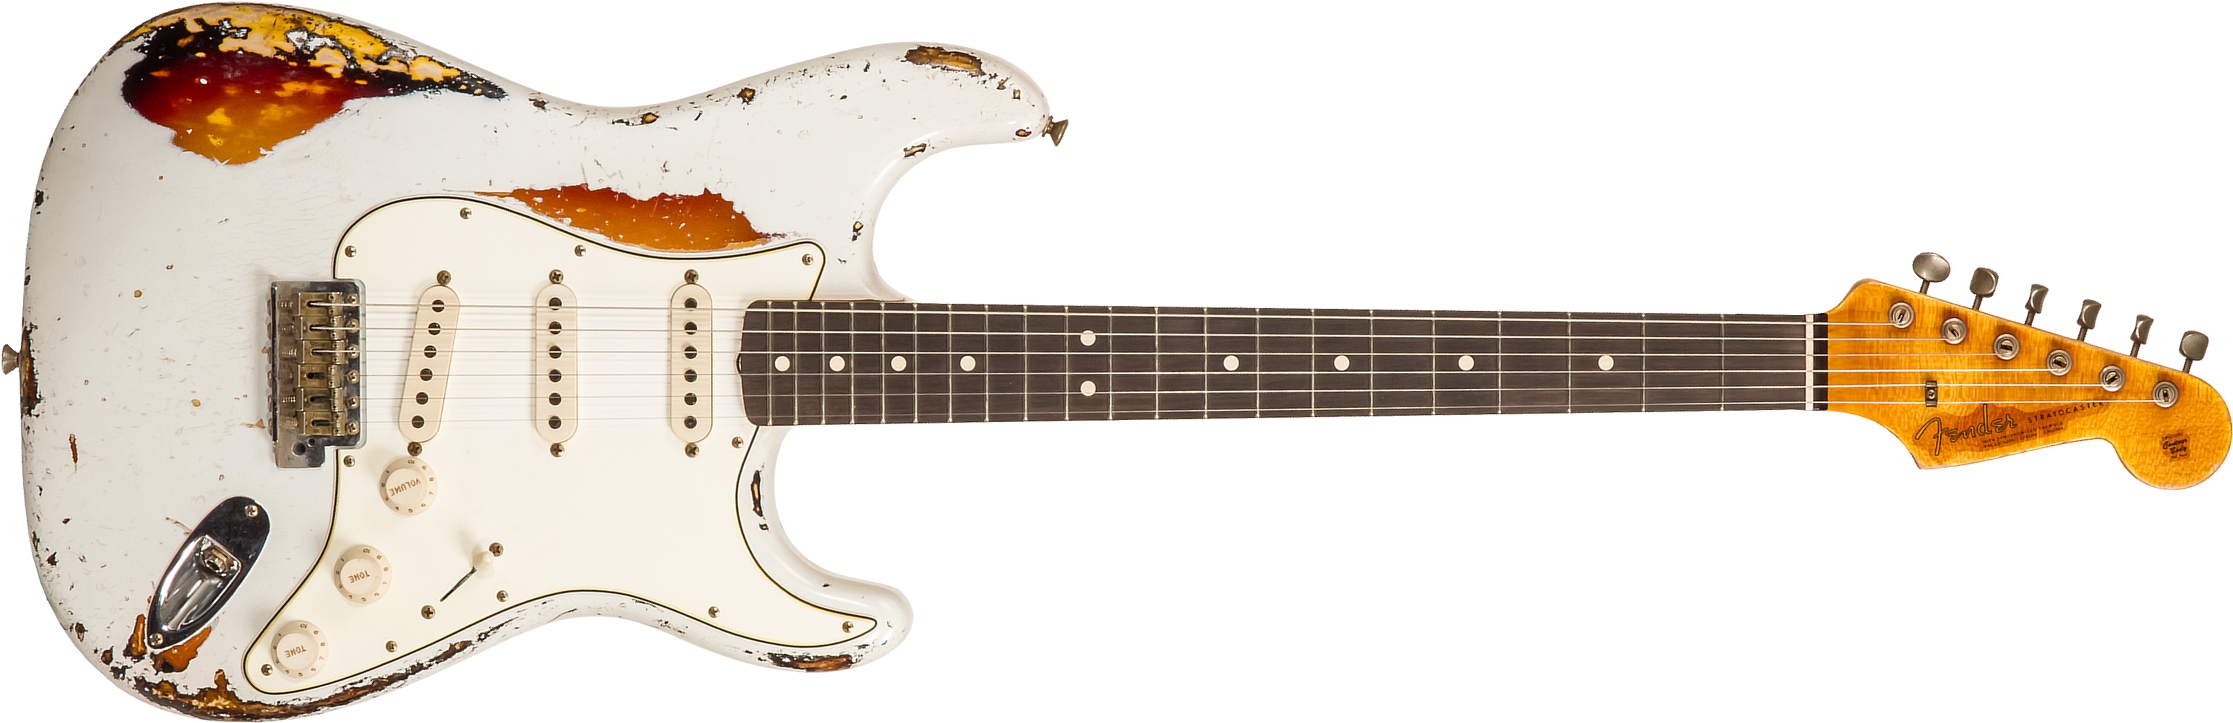 Fender Custom Shop Strat 1963 Masterbuilt K.mcmillin Bla #r117544 - Ultimate Relic Olympic White/3-color Sunburst - E-Gitarre in Str-Form - Main pictu